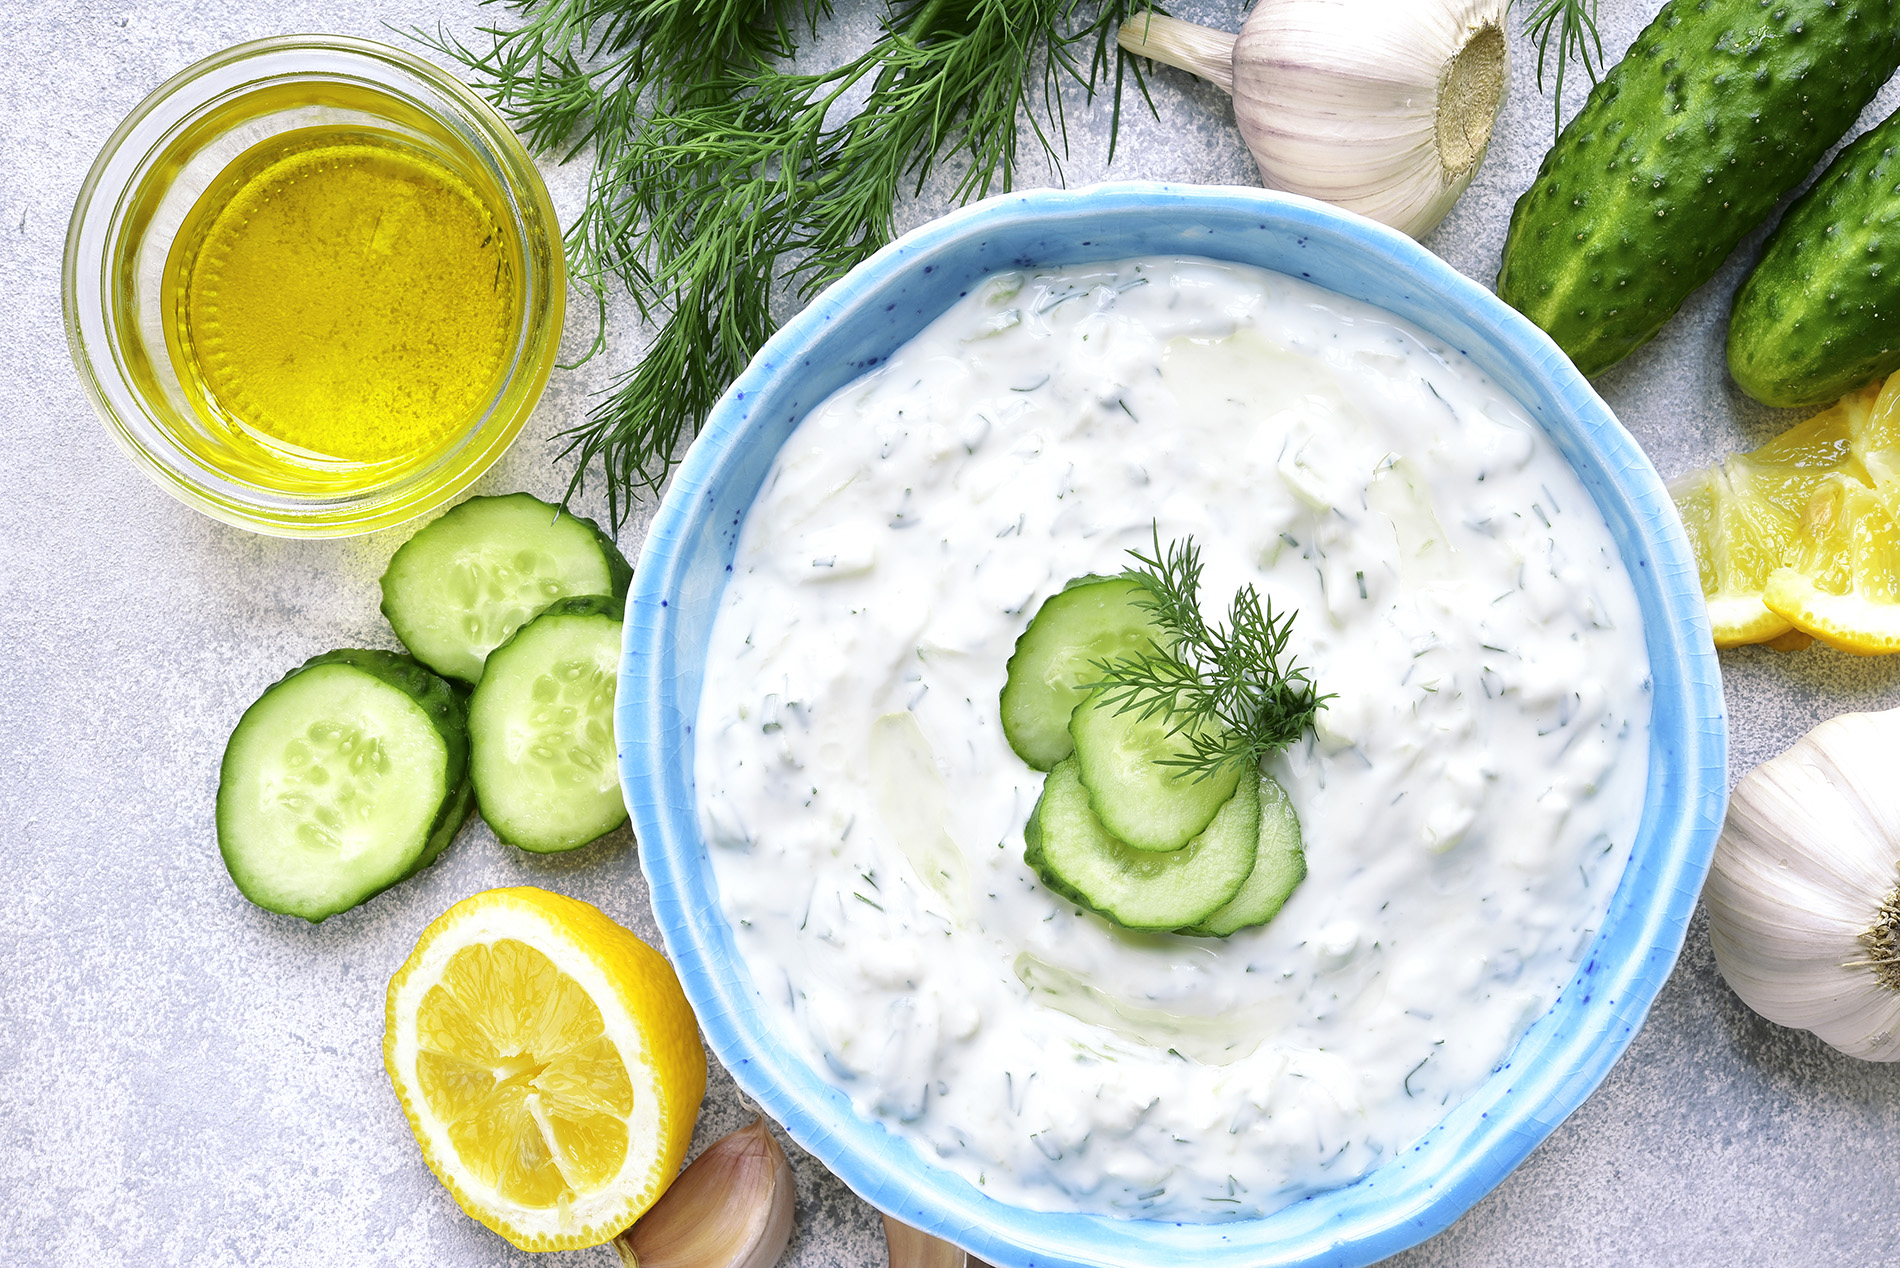 Bowl of Greek yogurt with cut lemons, cucumbers and crackers